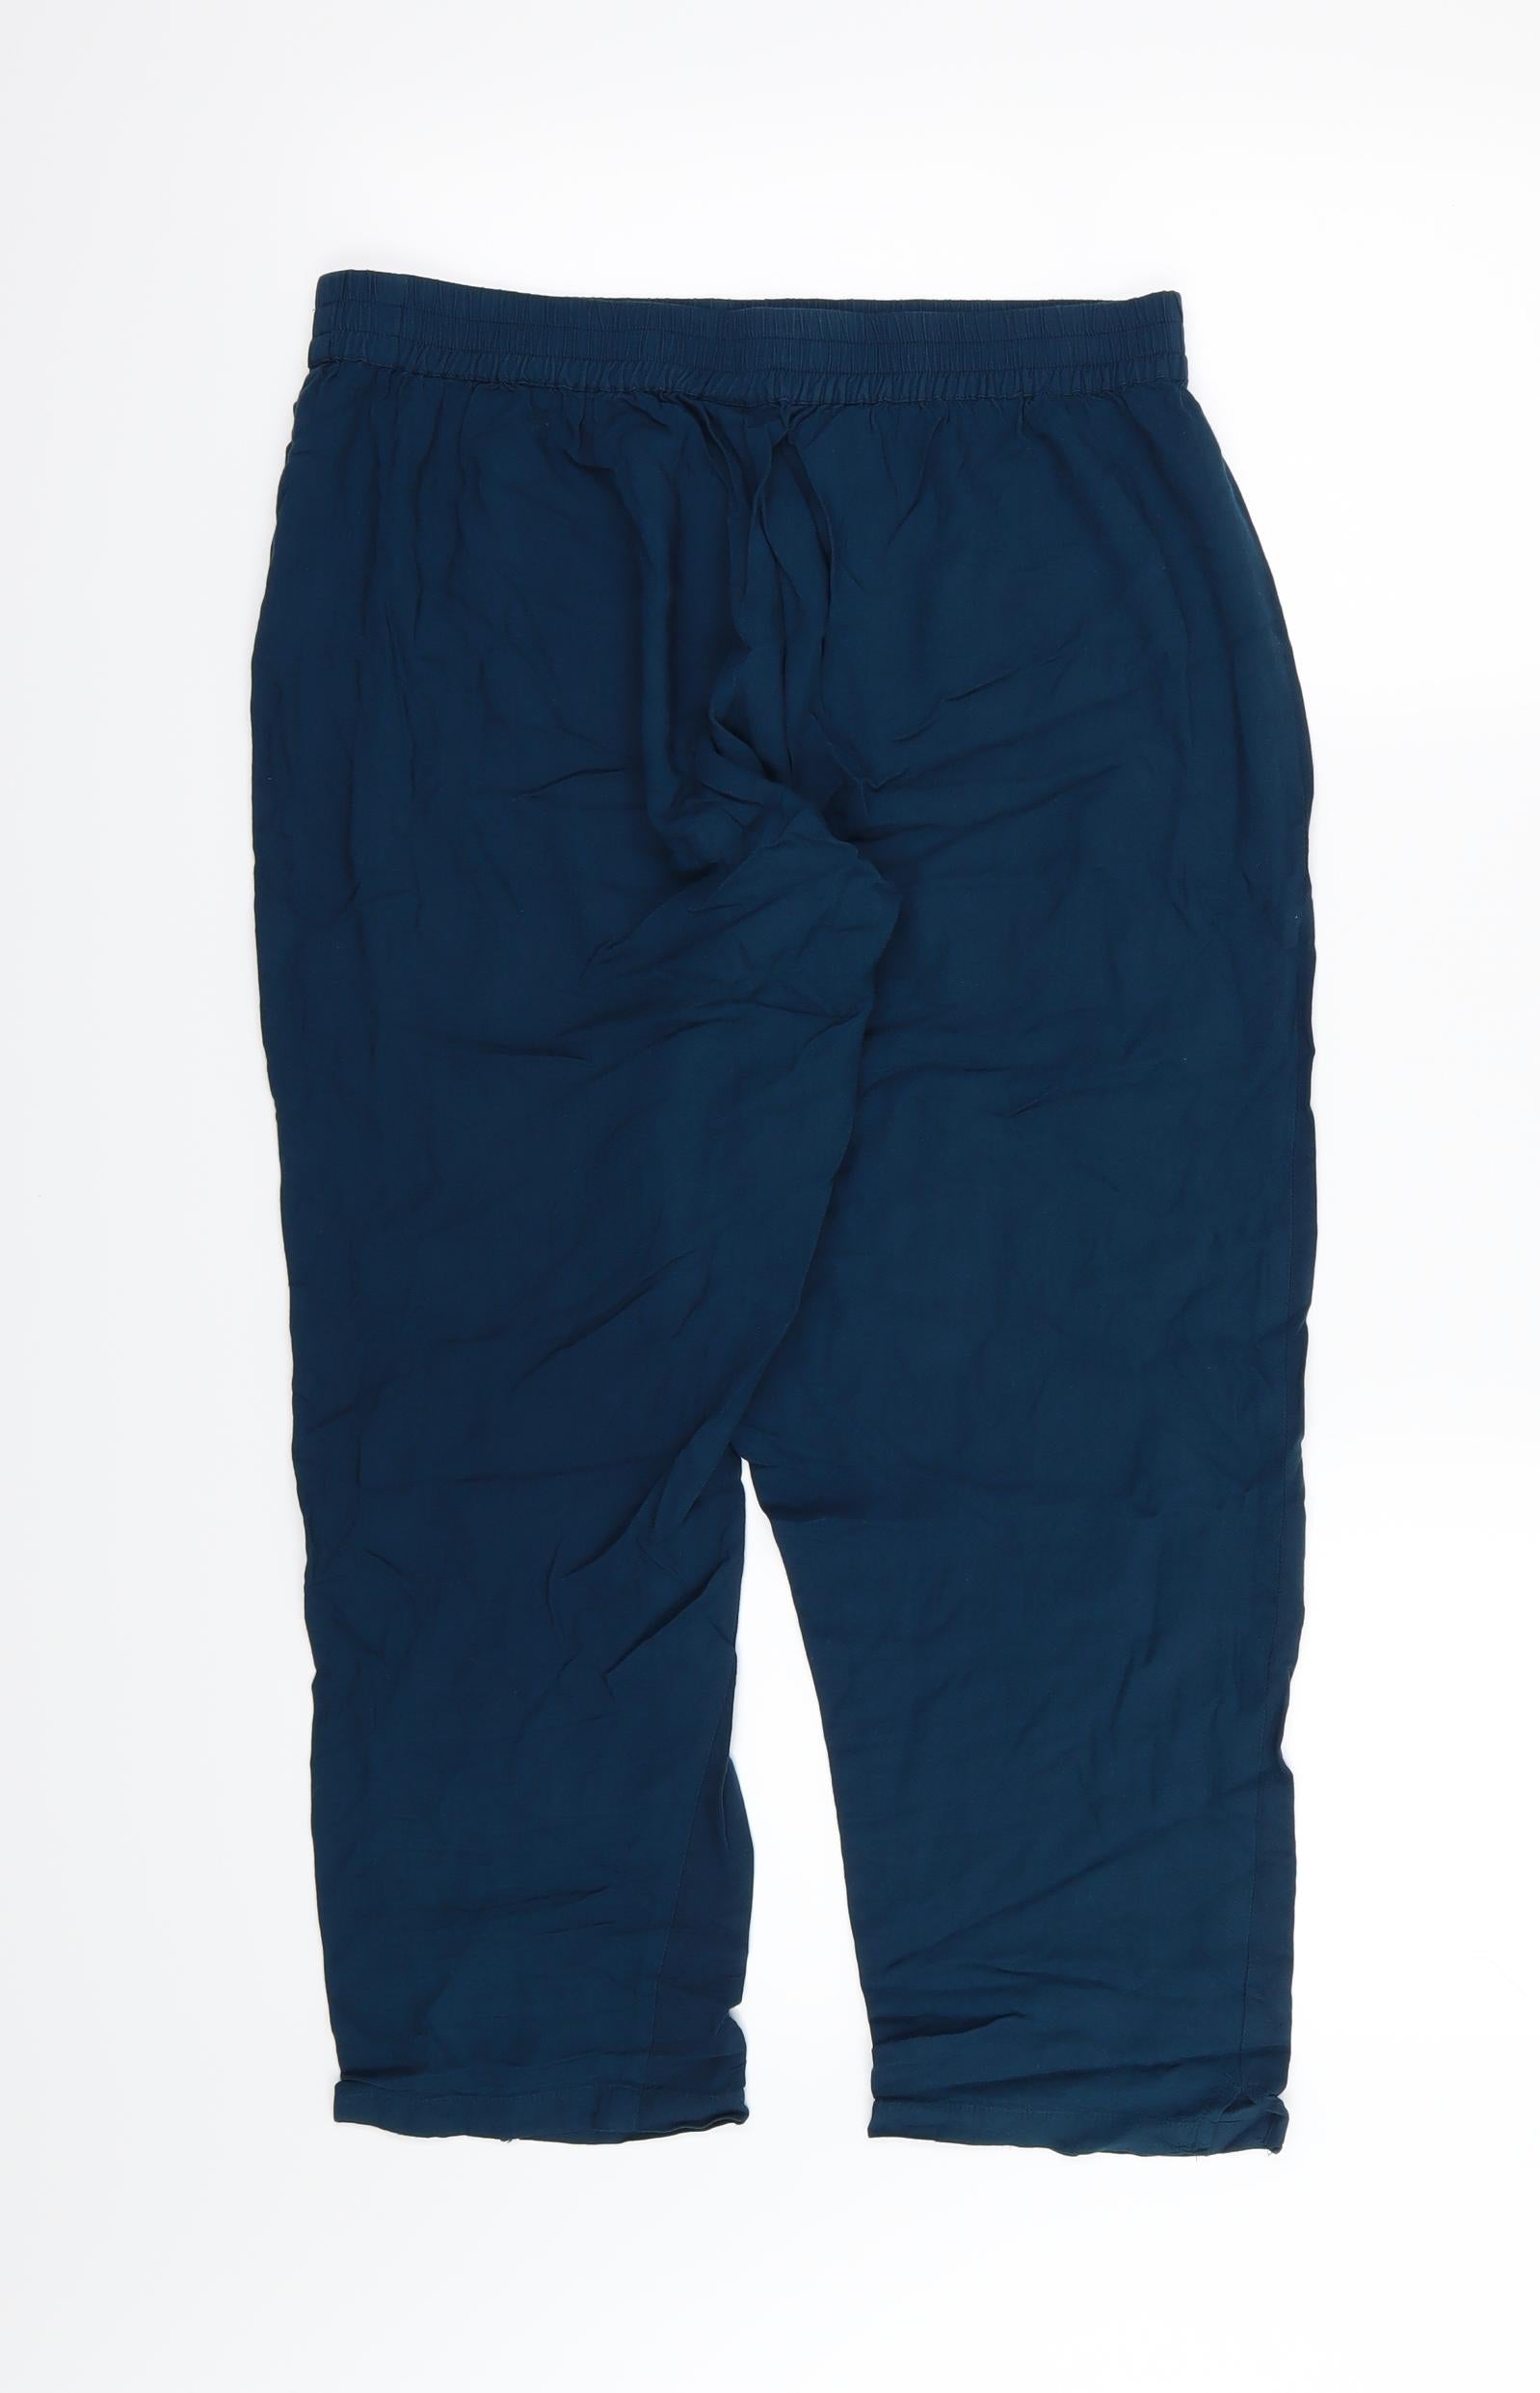 Zudio Black Skinny Jeans, 43% OFF | www.micoope.com.gt